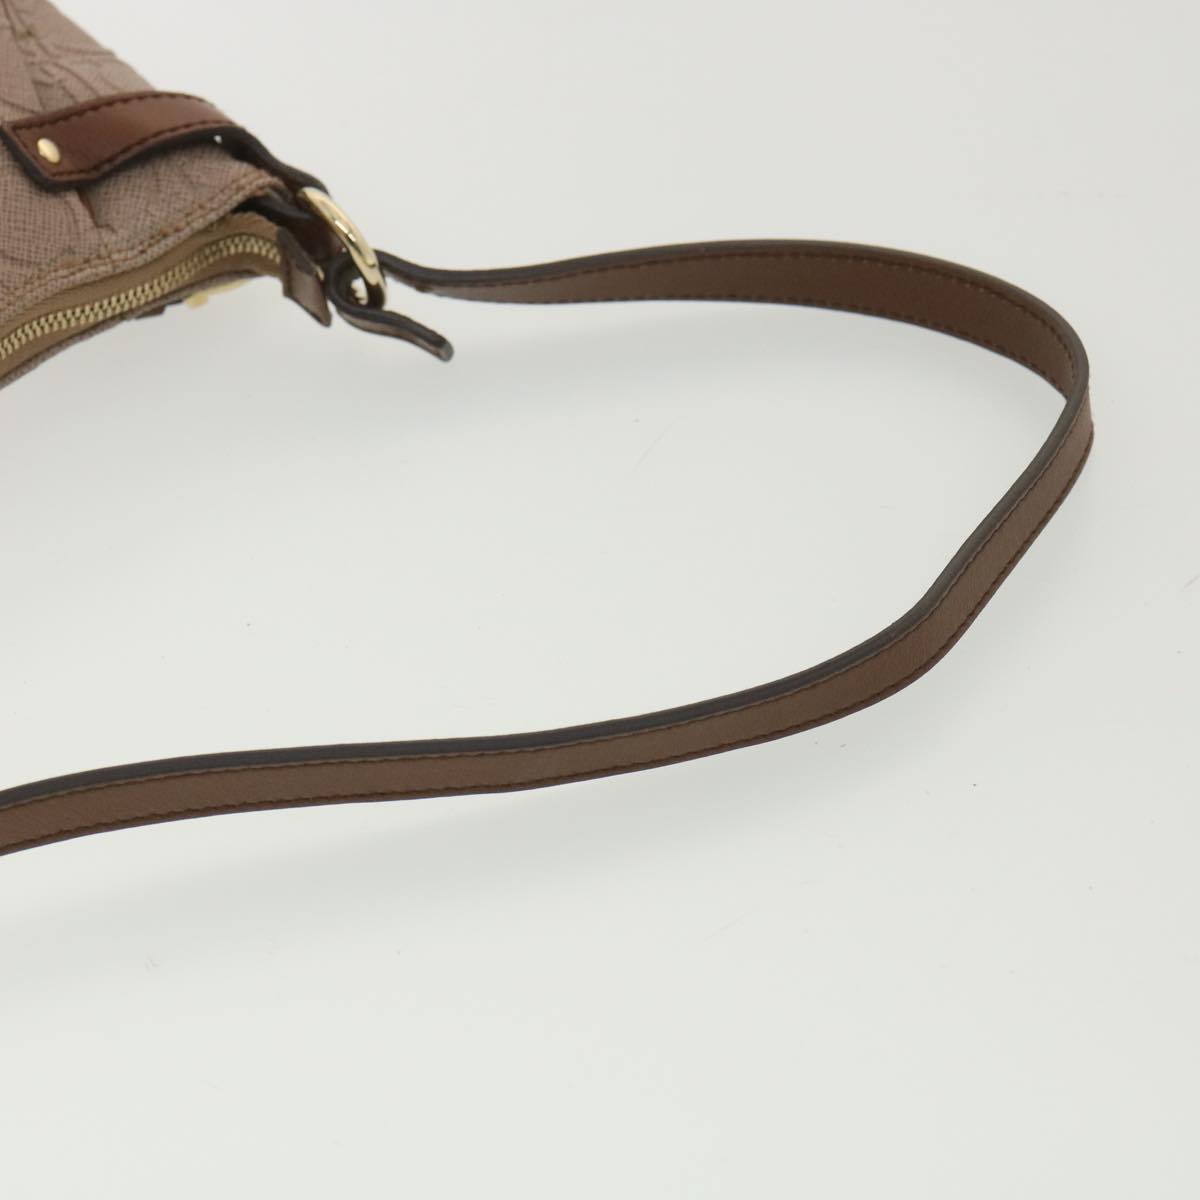 Salvatore Ferragamo Shoulder Bag PVC Leather Brown AQ-21/4435 Auth ro936